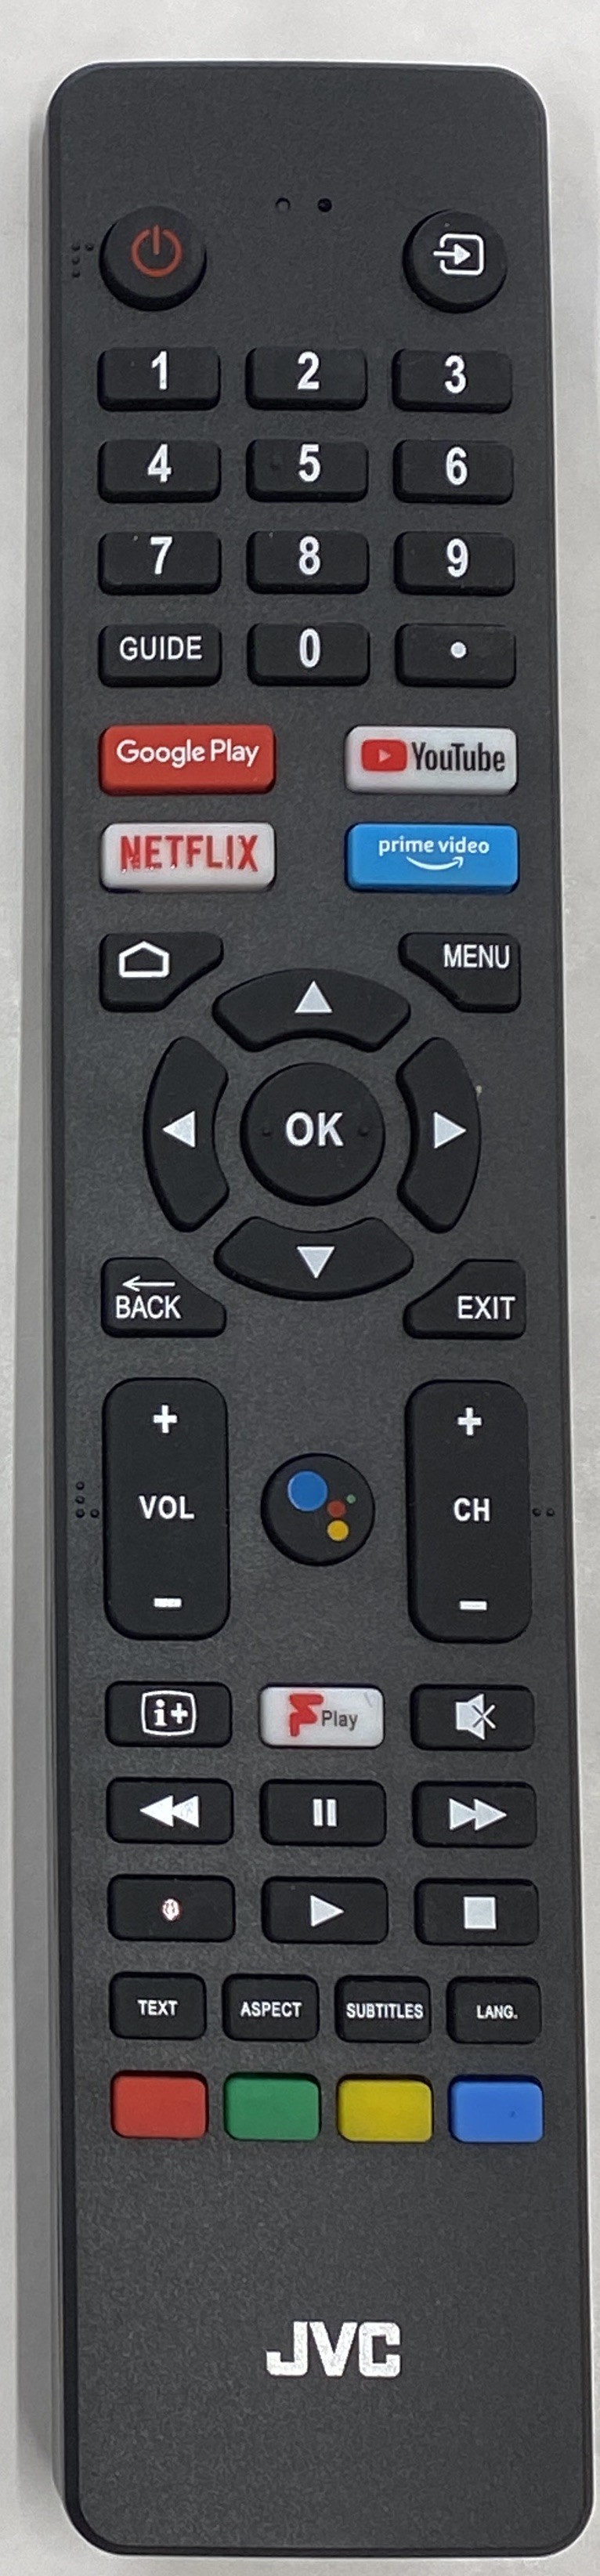 JVC LT-40CA890 Remote Control Original 